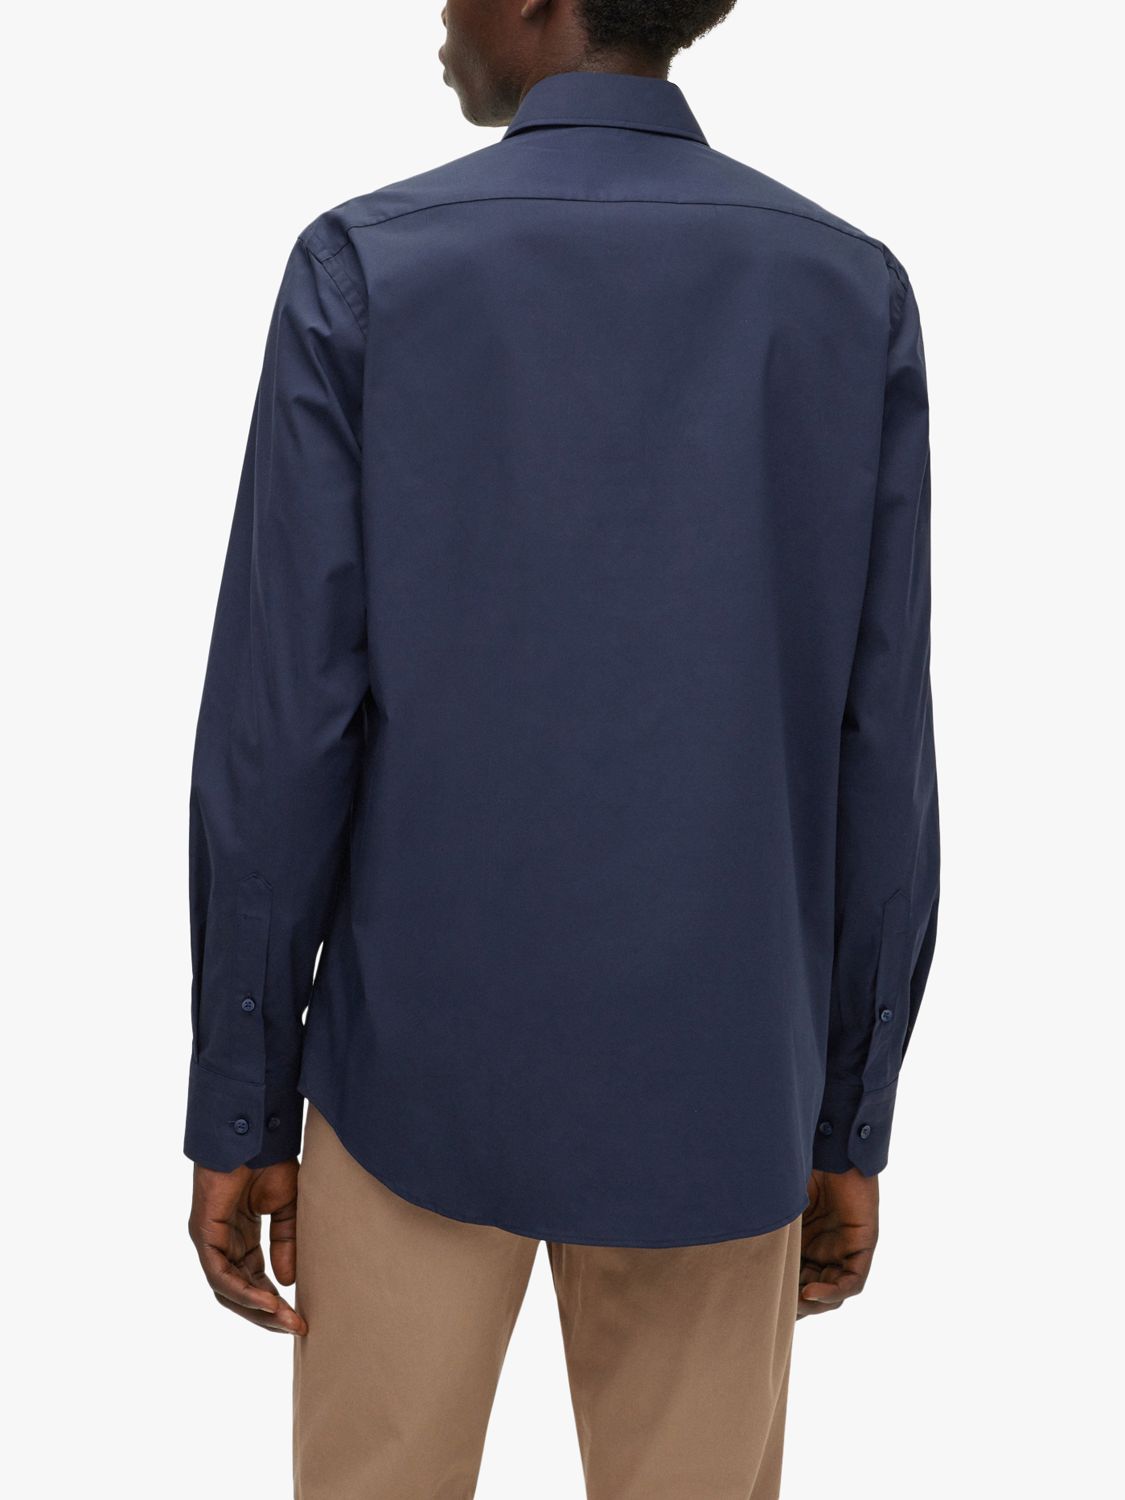 HUGO BOSS Joe Kent Regular Fit Shirt, Dark Blue, 15.75